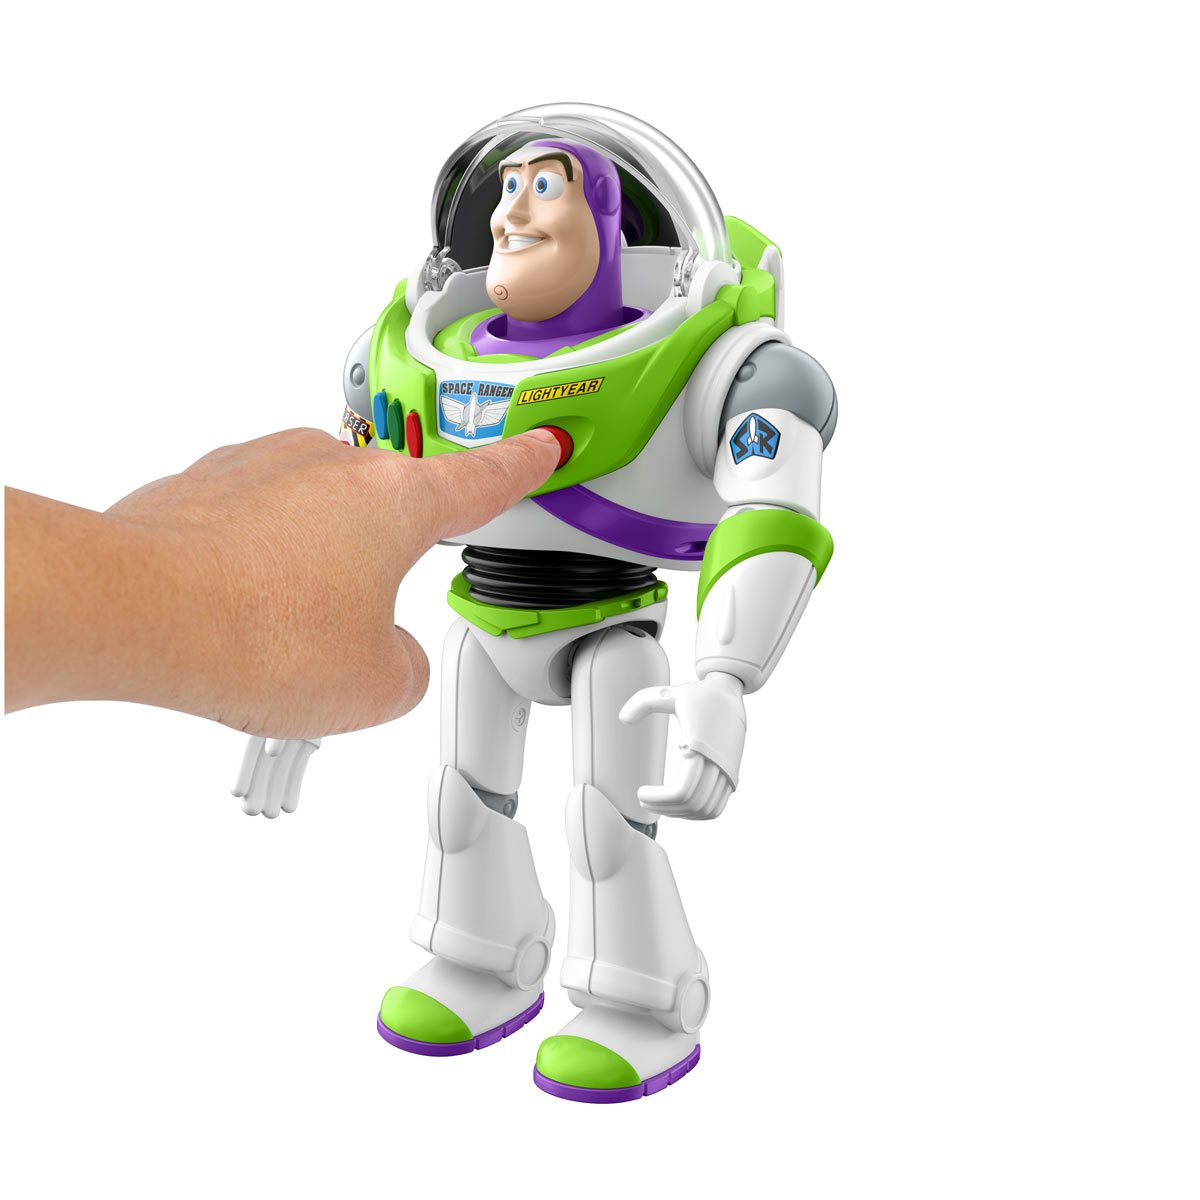 Buzz Lightyear Interactive Talking Action Figure 12 